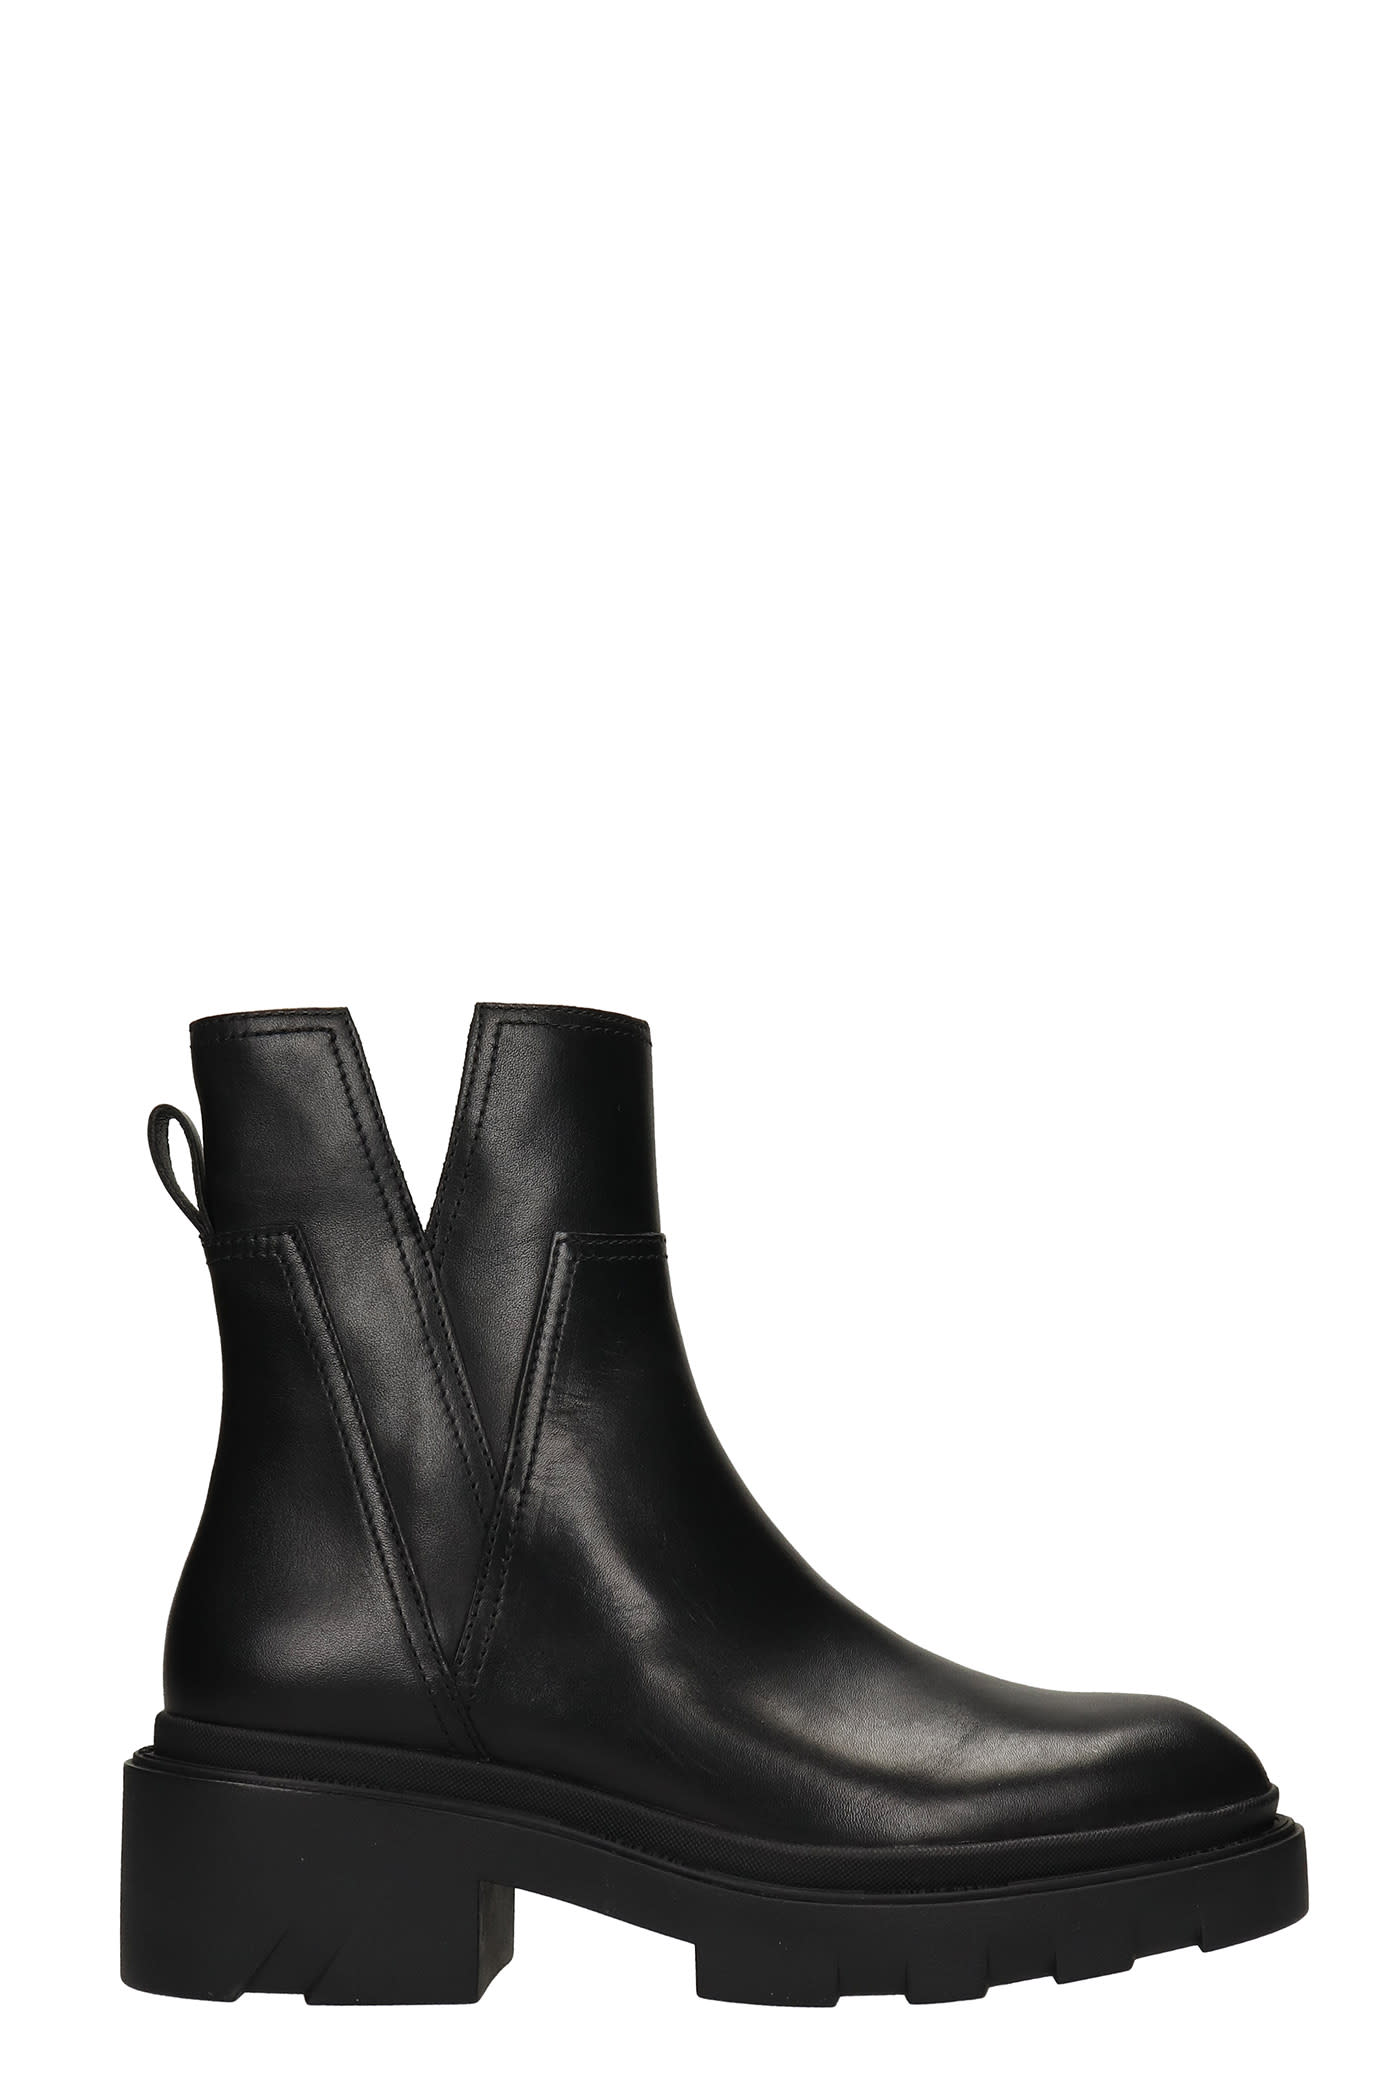 Ash Merlose Combat Boots In Black Leather